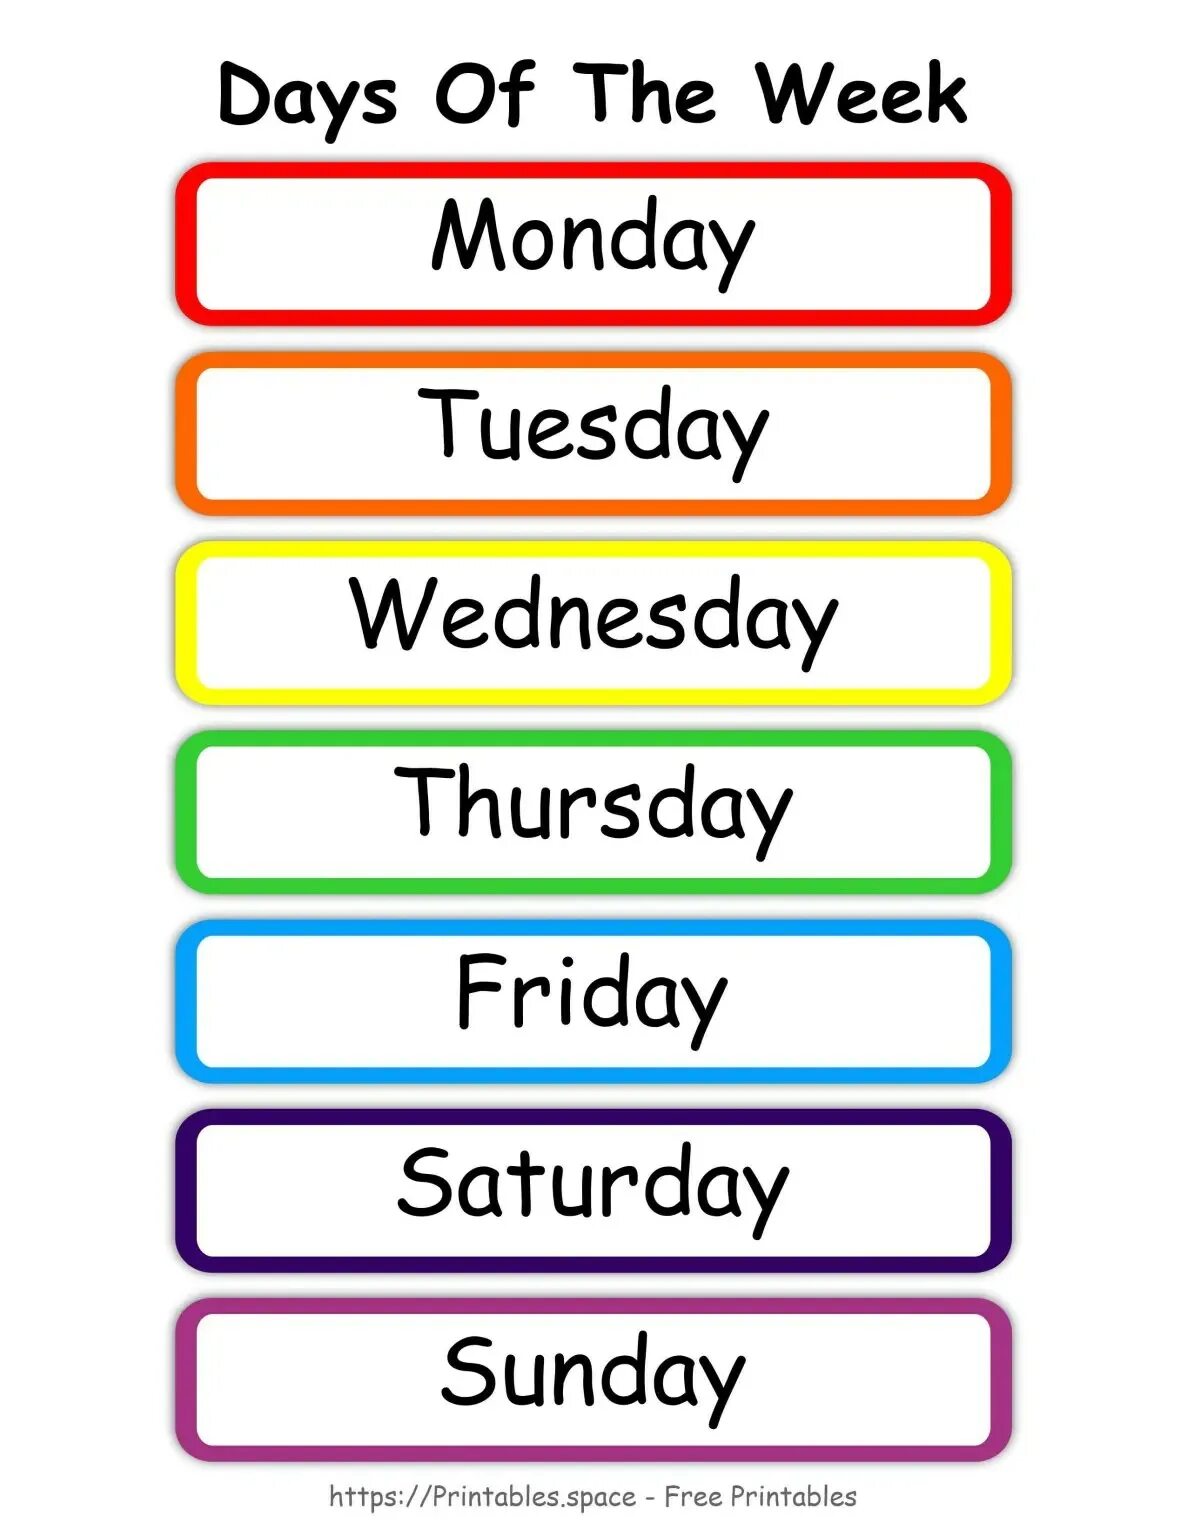 Days of the week. Days of the week плакат. English Days of the week. Days of the week for Kids. N the week